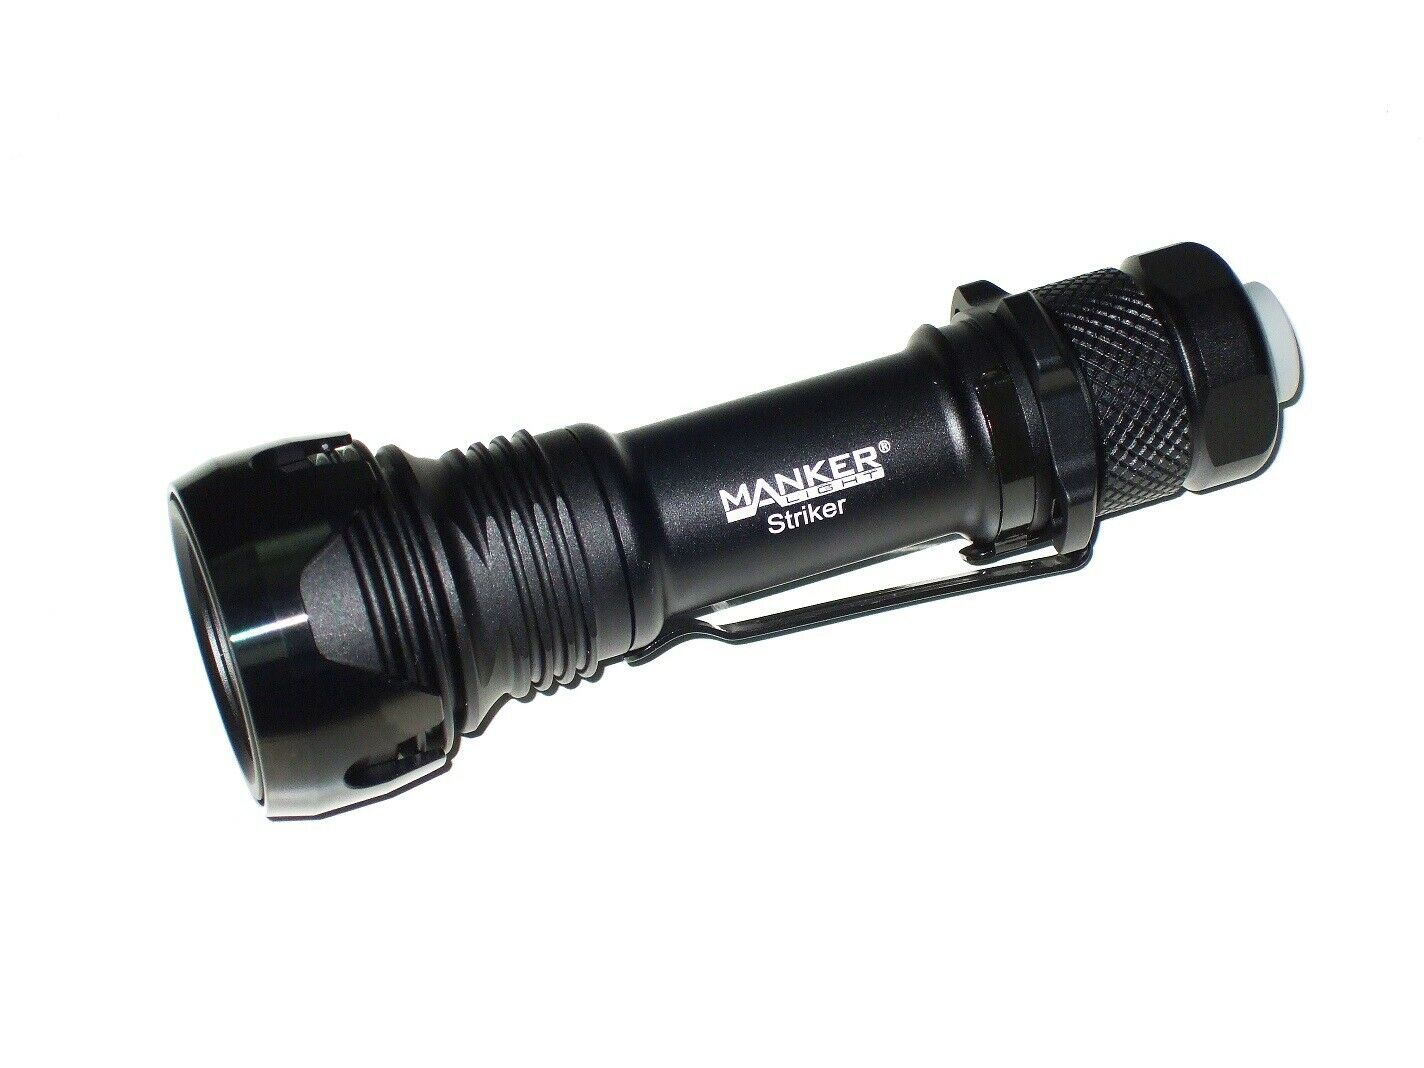 Manker 'Striker' 2300 Lumen Tactical Flashlight - Black